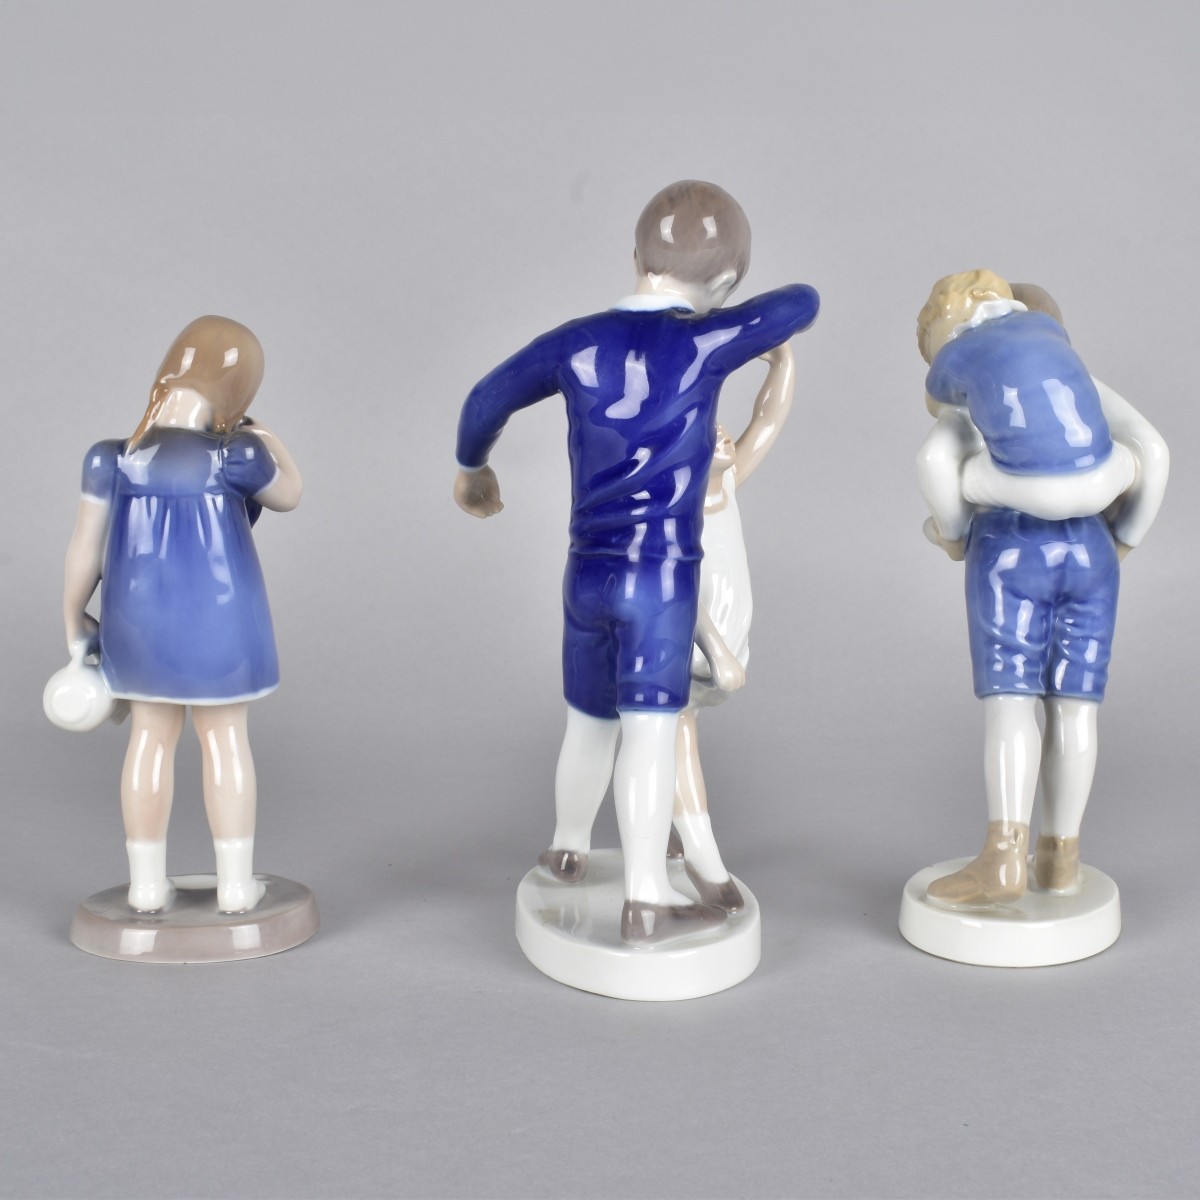 Three Bing & Grondahl (B&G) Porcelain Figurines